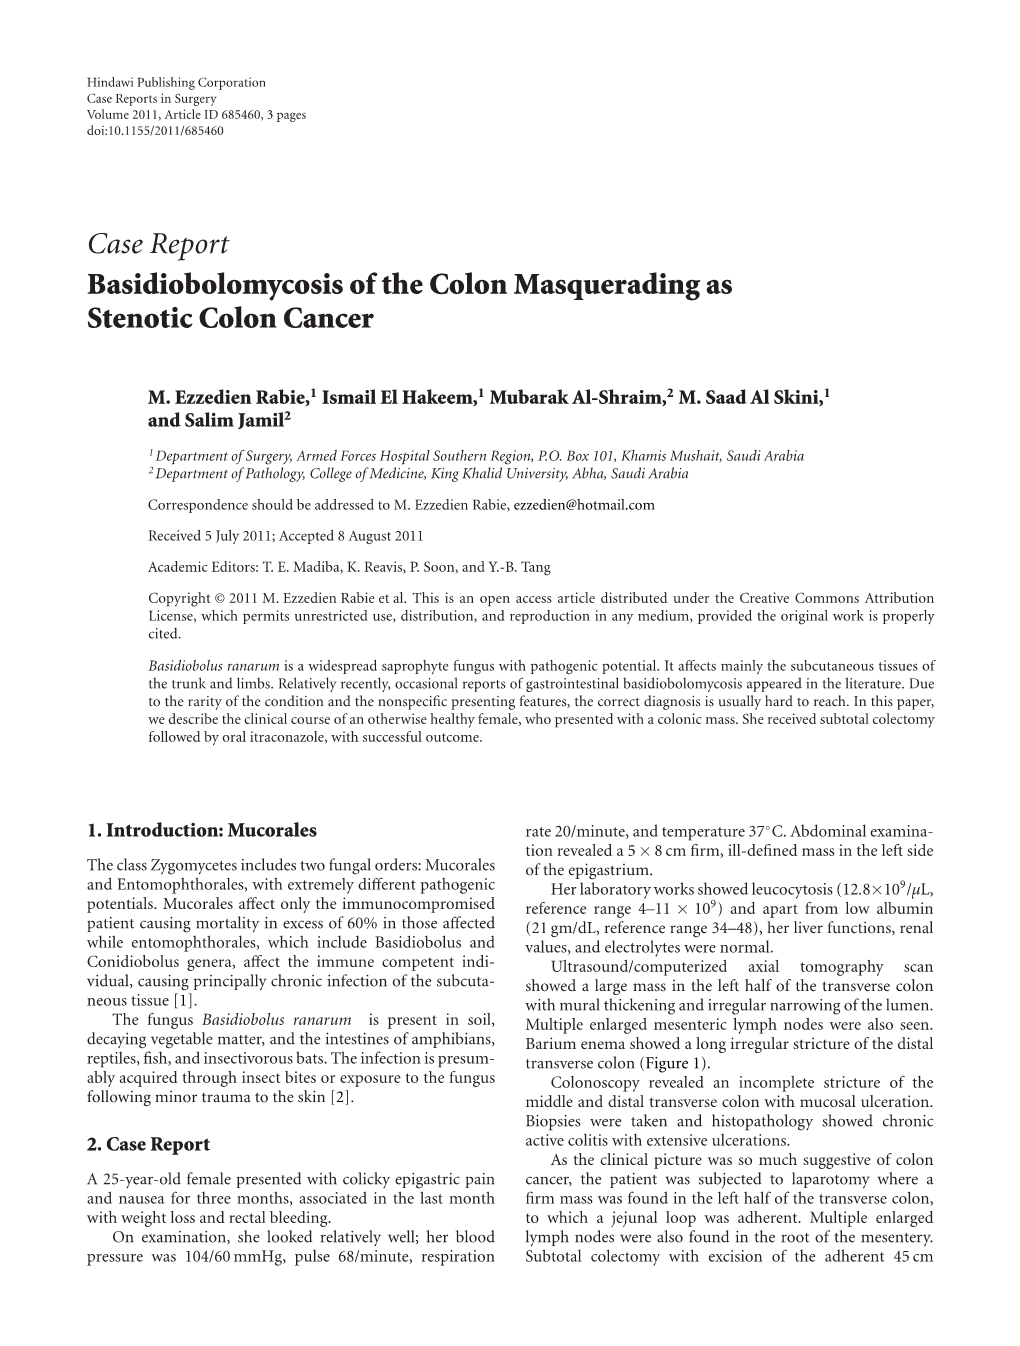 Case Report Basidiobolomycosis of the Colon Masquerading As Stenotic Colon Cancer